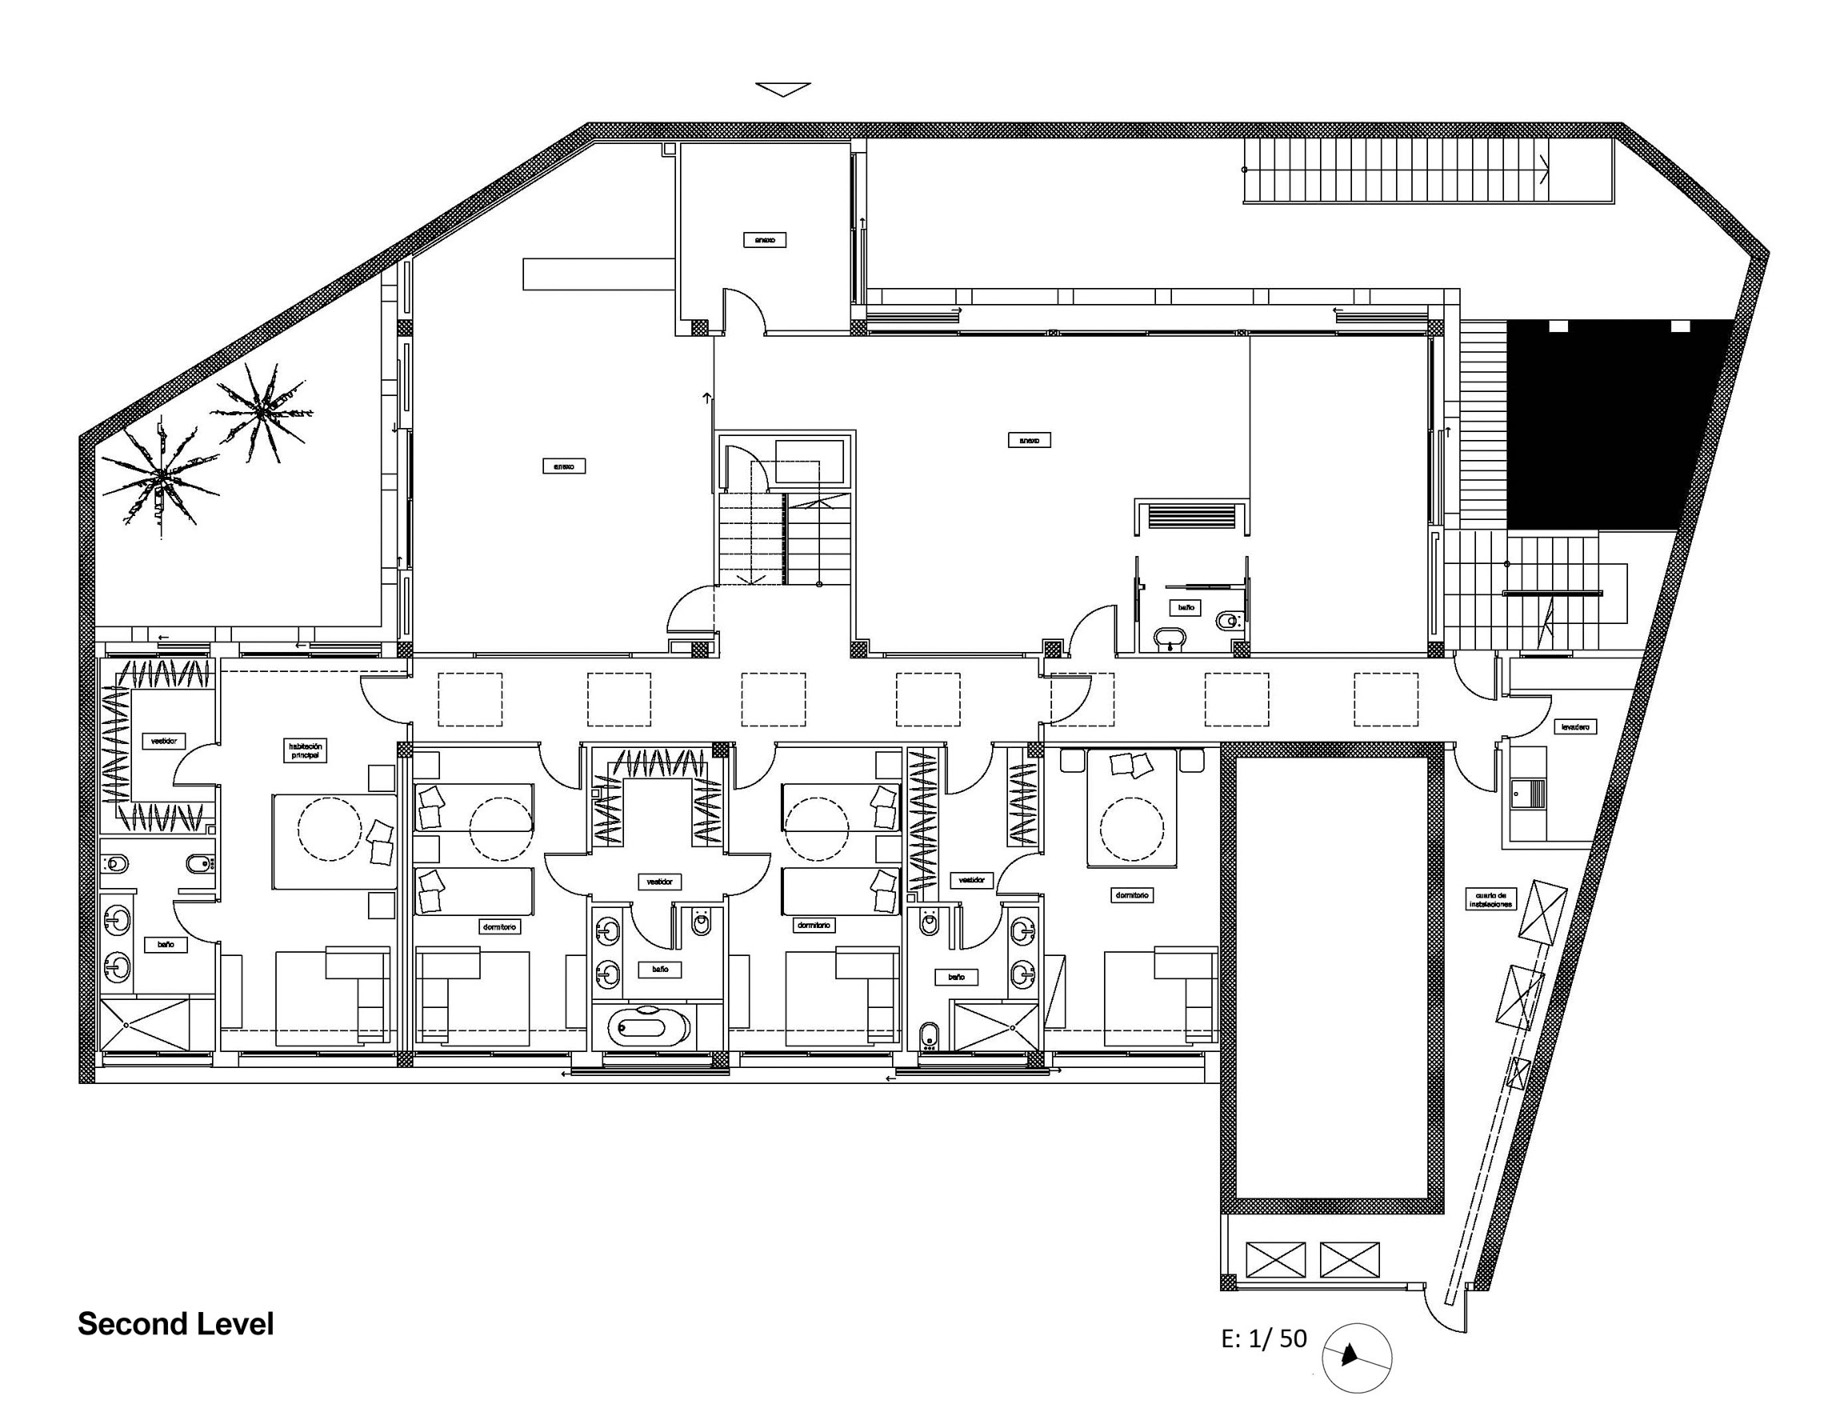 Second Level Floor Plan - Santa Cristina d’Aro Residence - Girona, Catalonia, Spain